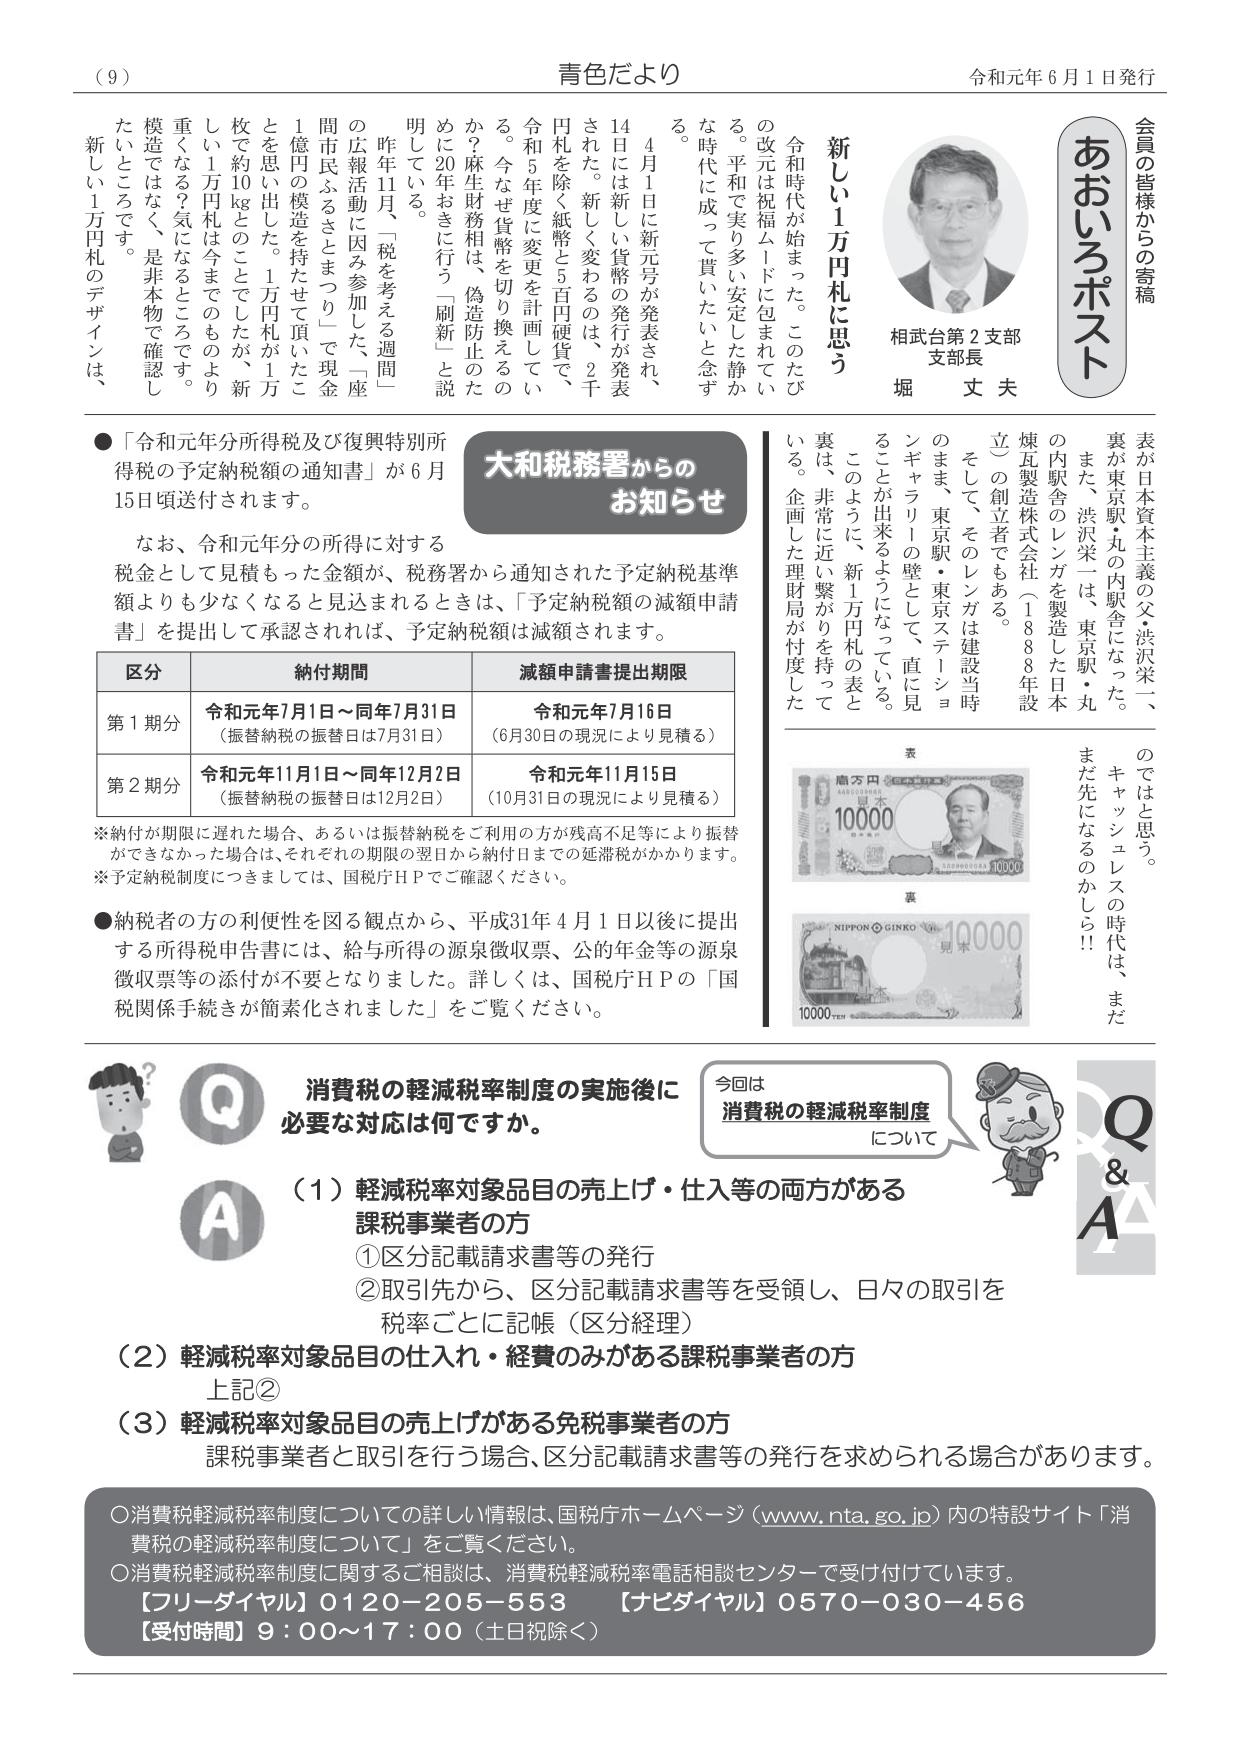 http://www.shokonet.or.jp/aoiro/yamato/news/dayori_134_09.jpg